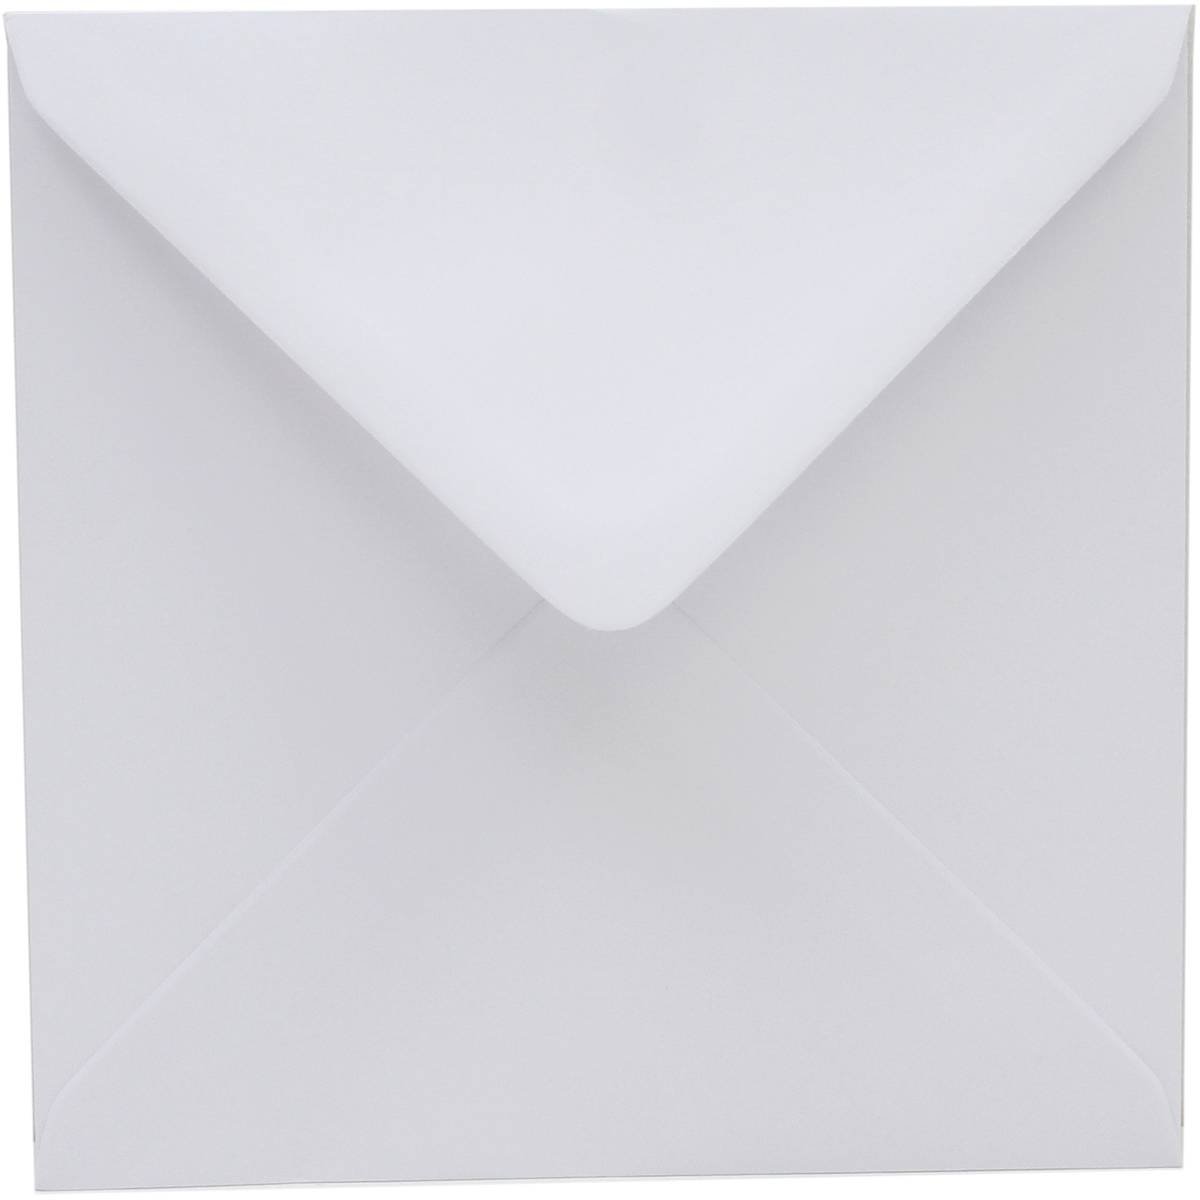 14x14 cm Hvid 50stk - Kuverter - Papirgalleriet